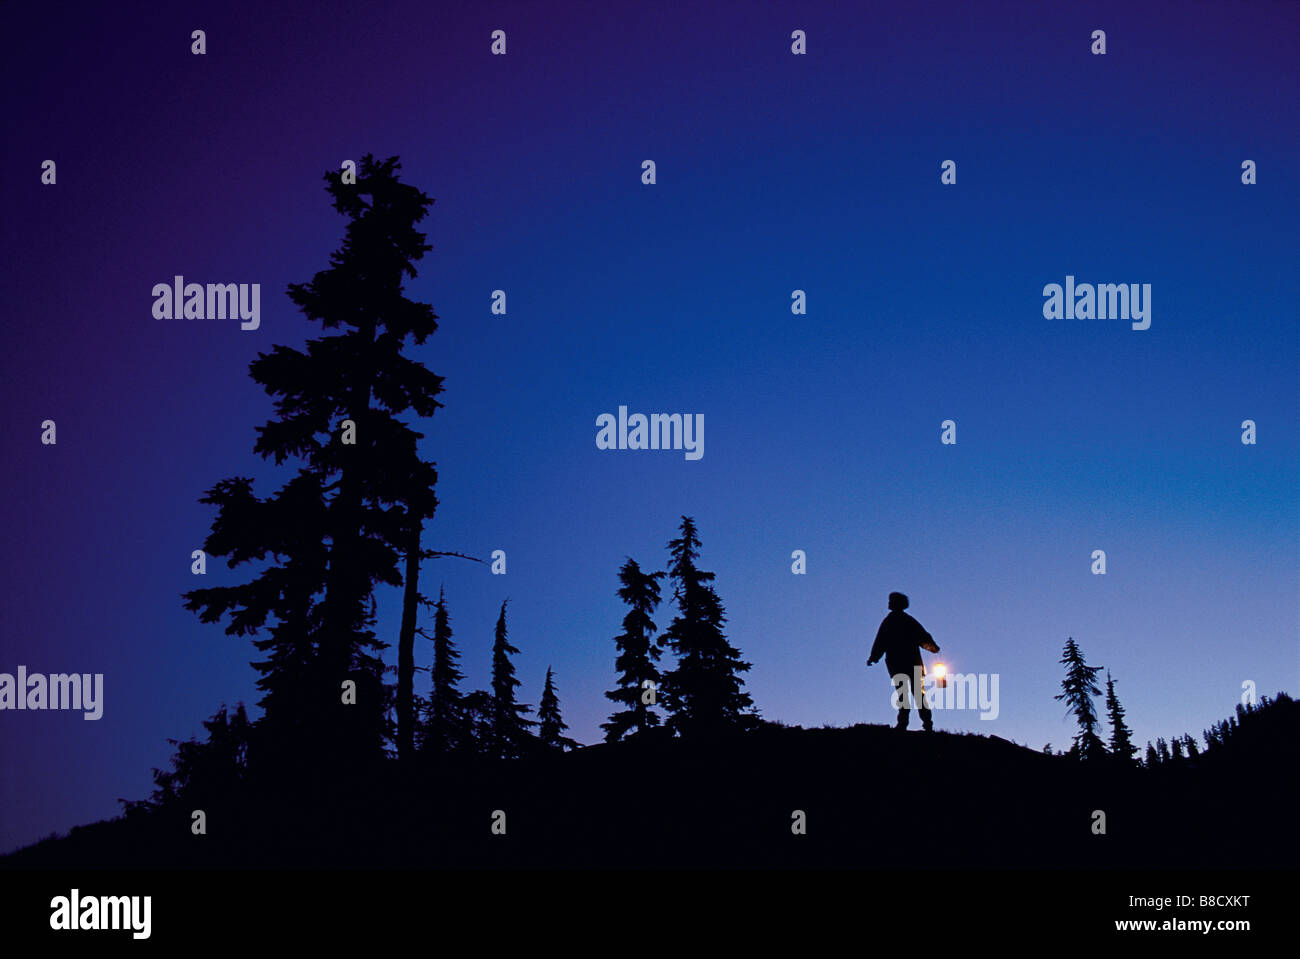 FV2130, David Nunuk; Silhouette  person  night outdoors lantern Stock Photo